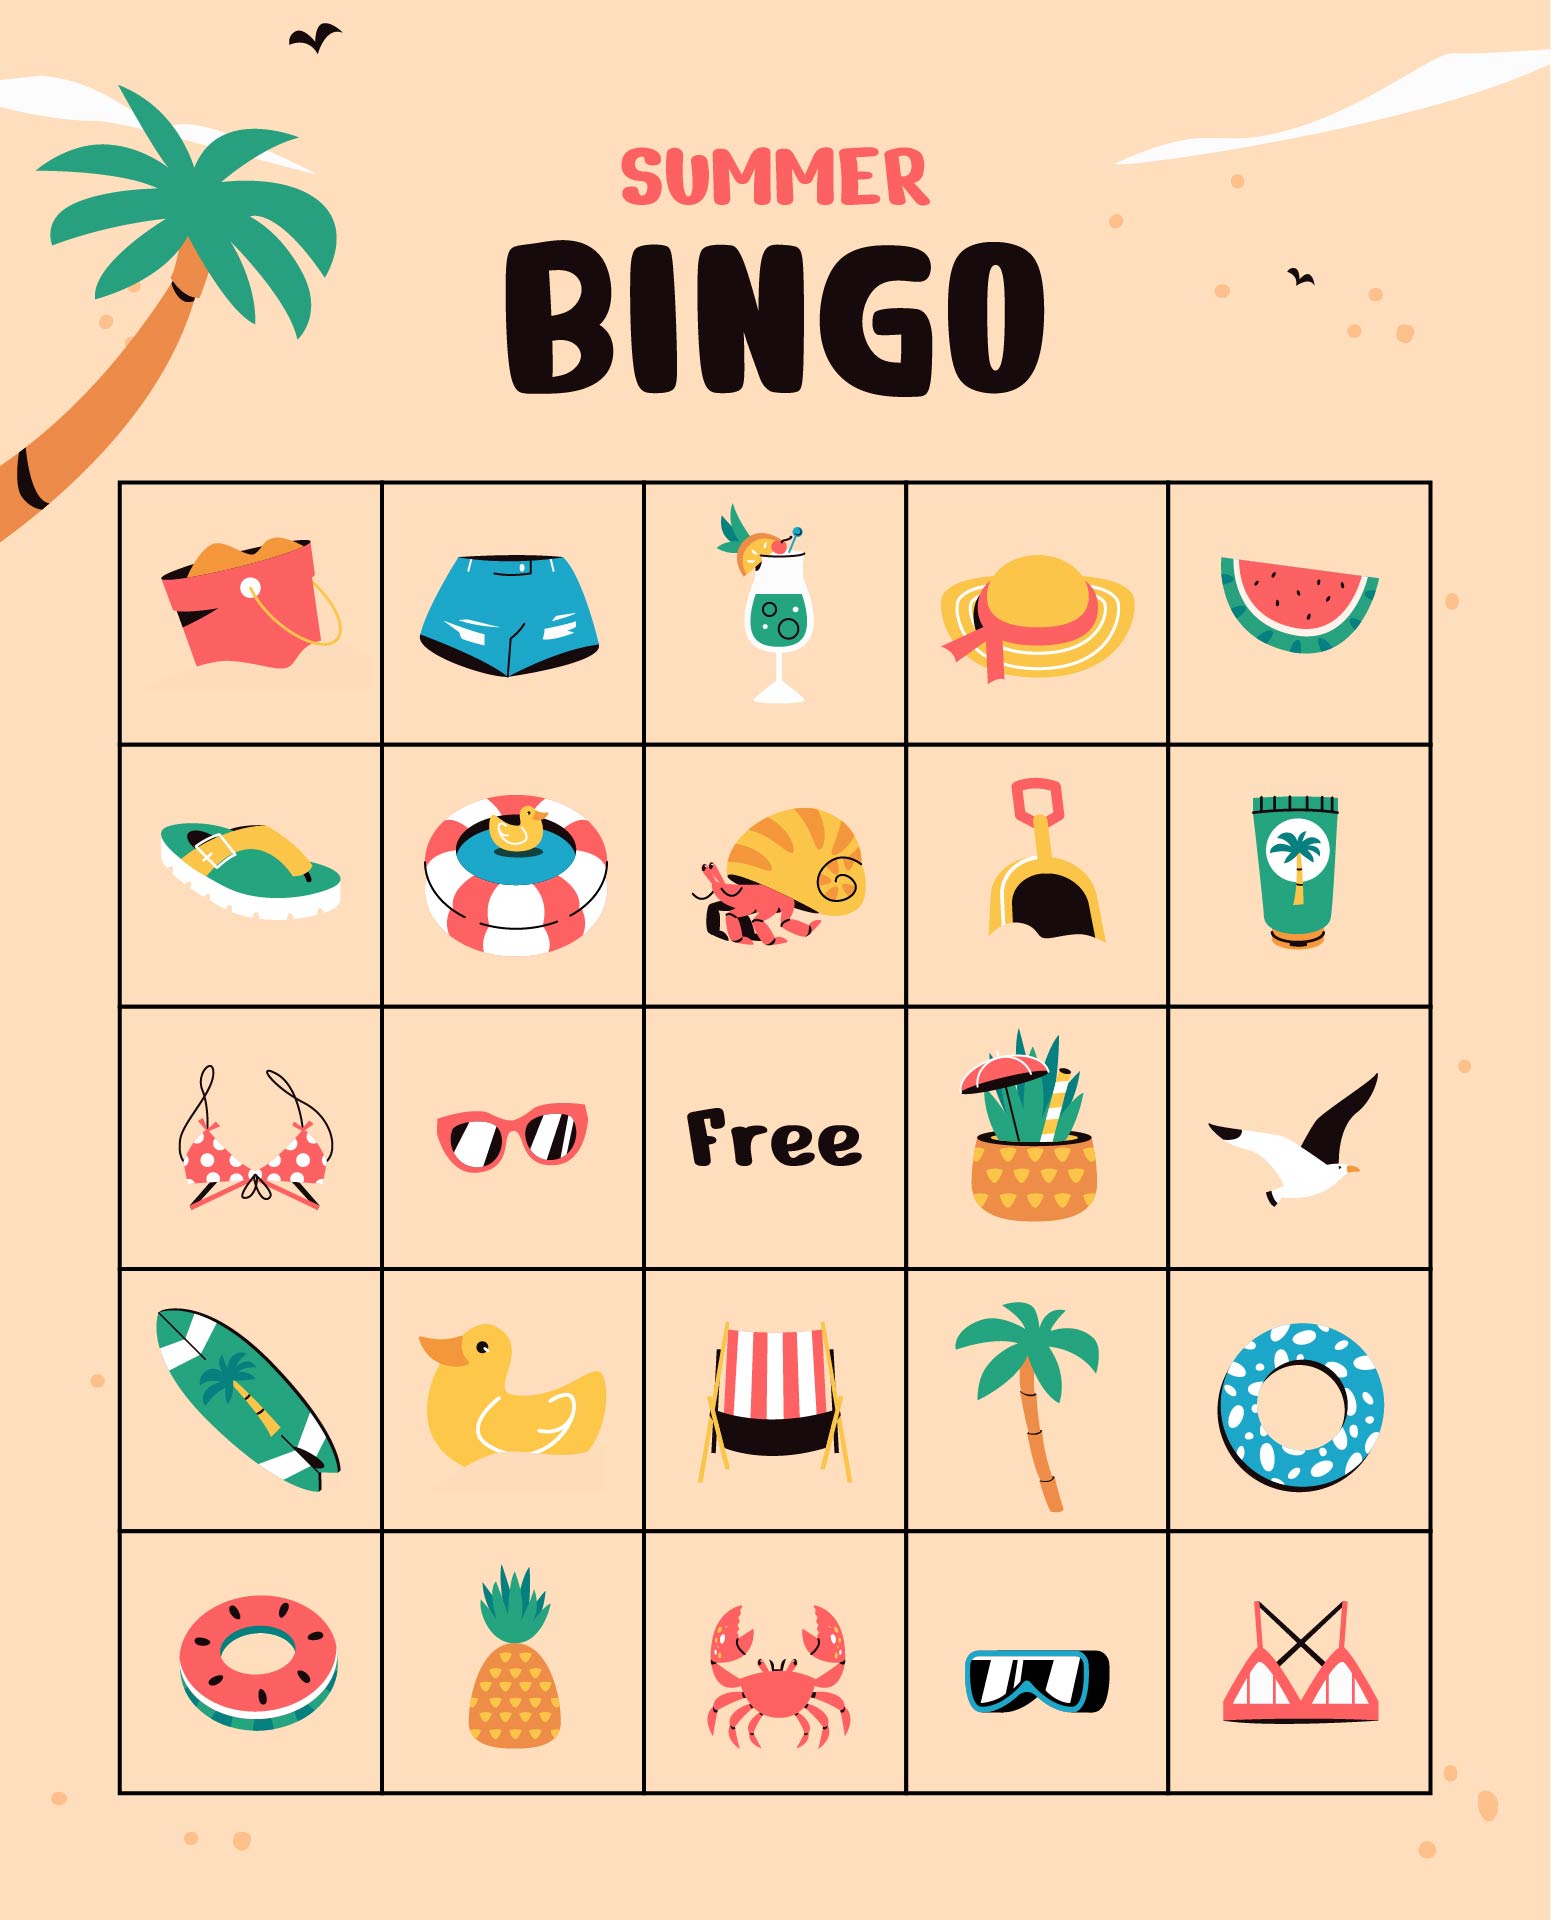 free clipart of bingo cards - photo #15